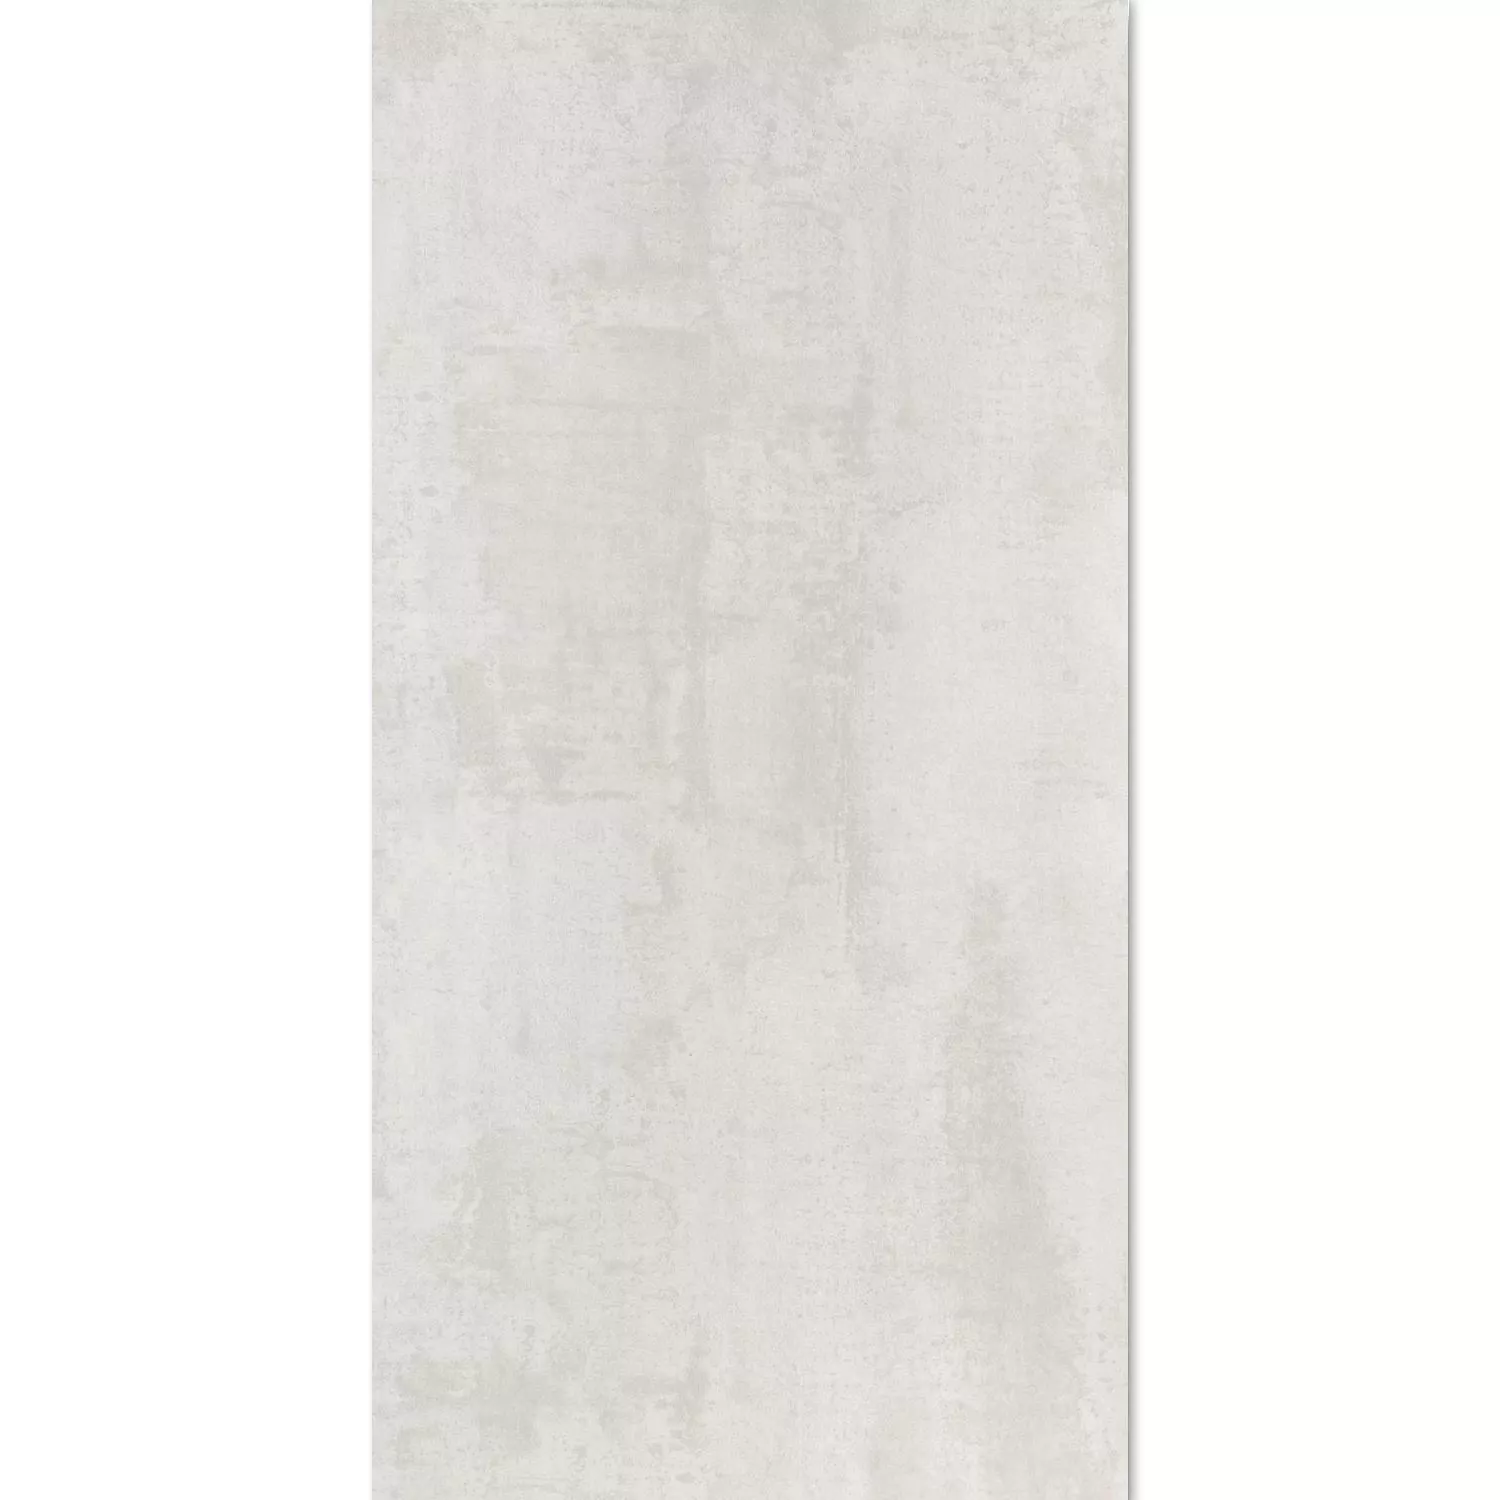 Bodenfliesen Herion Metalloptik Lappato Blanco 45x90cm